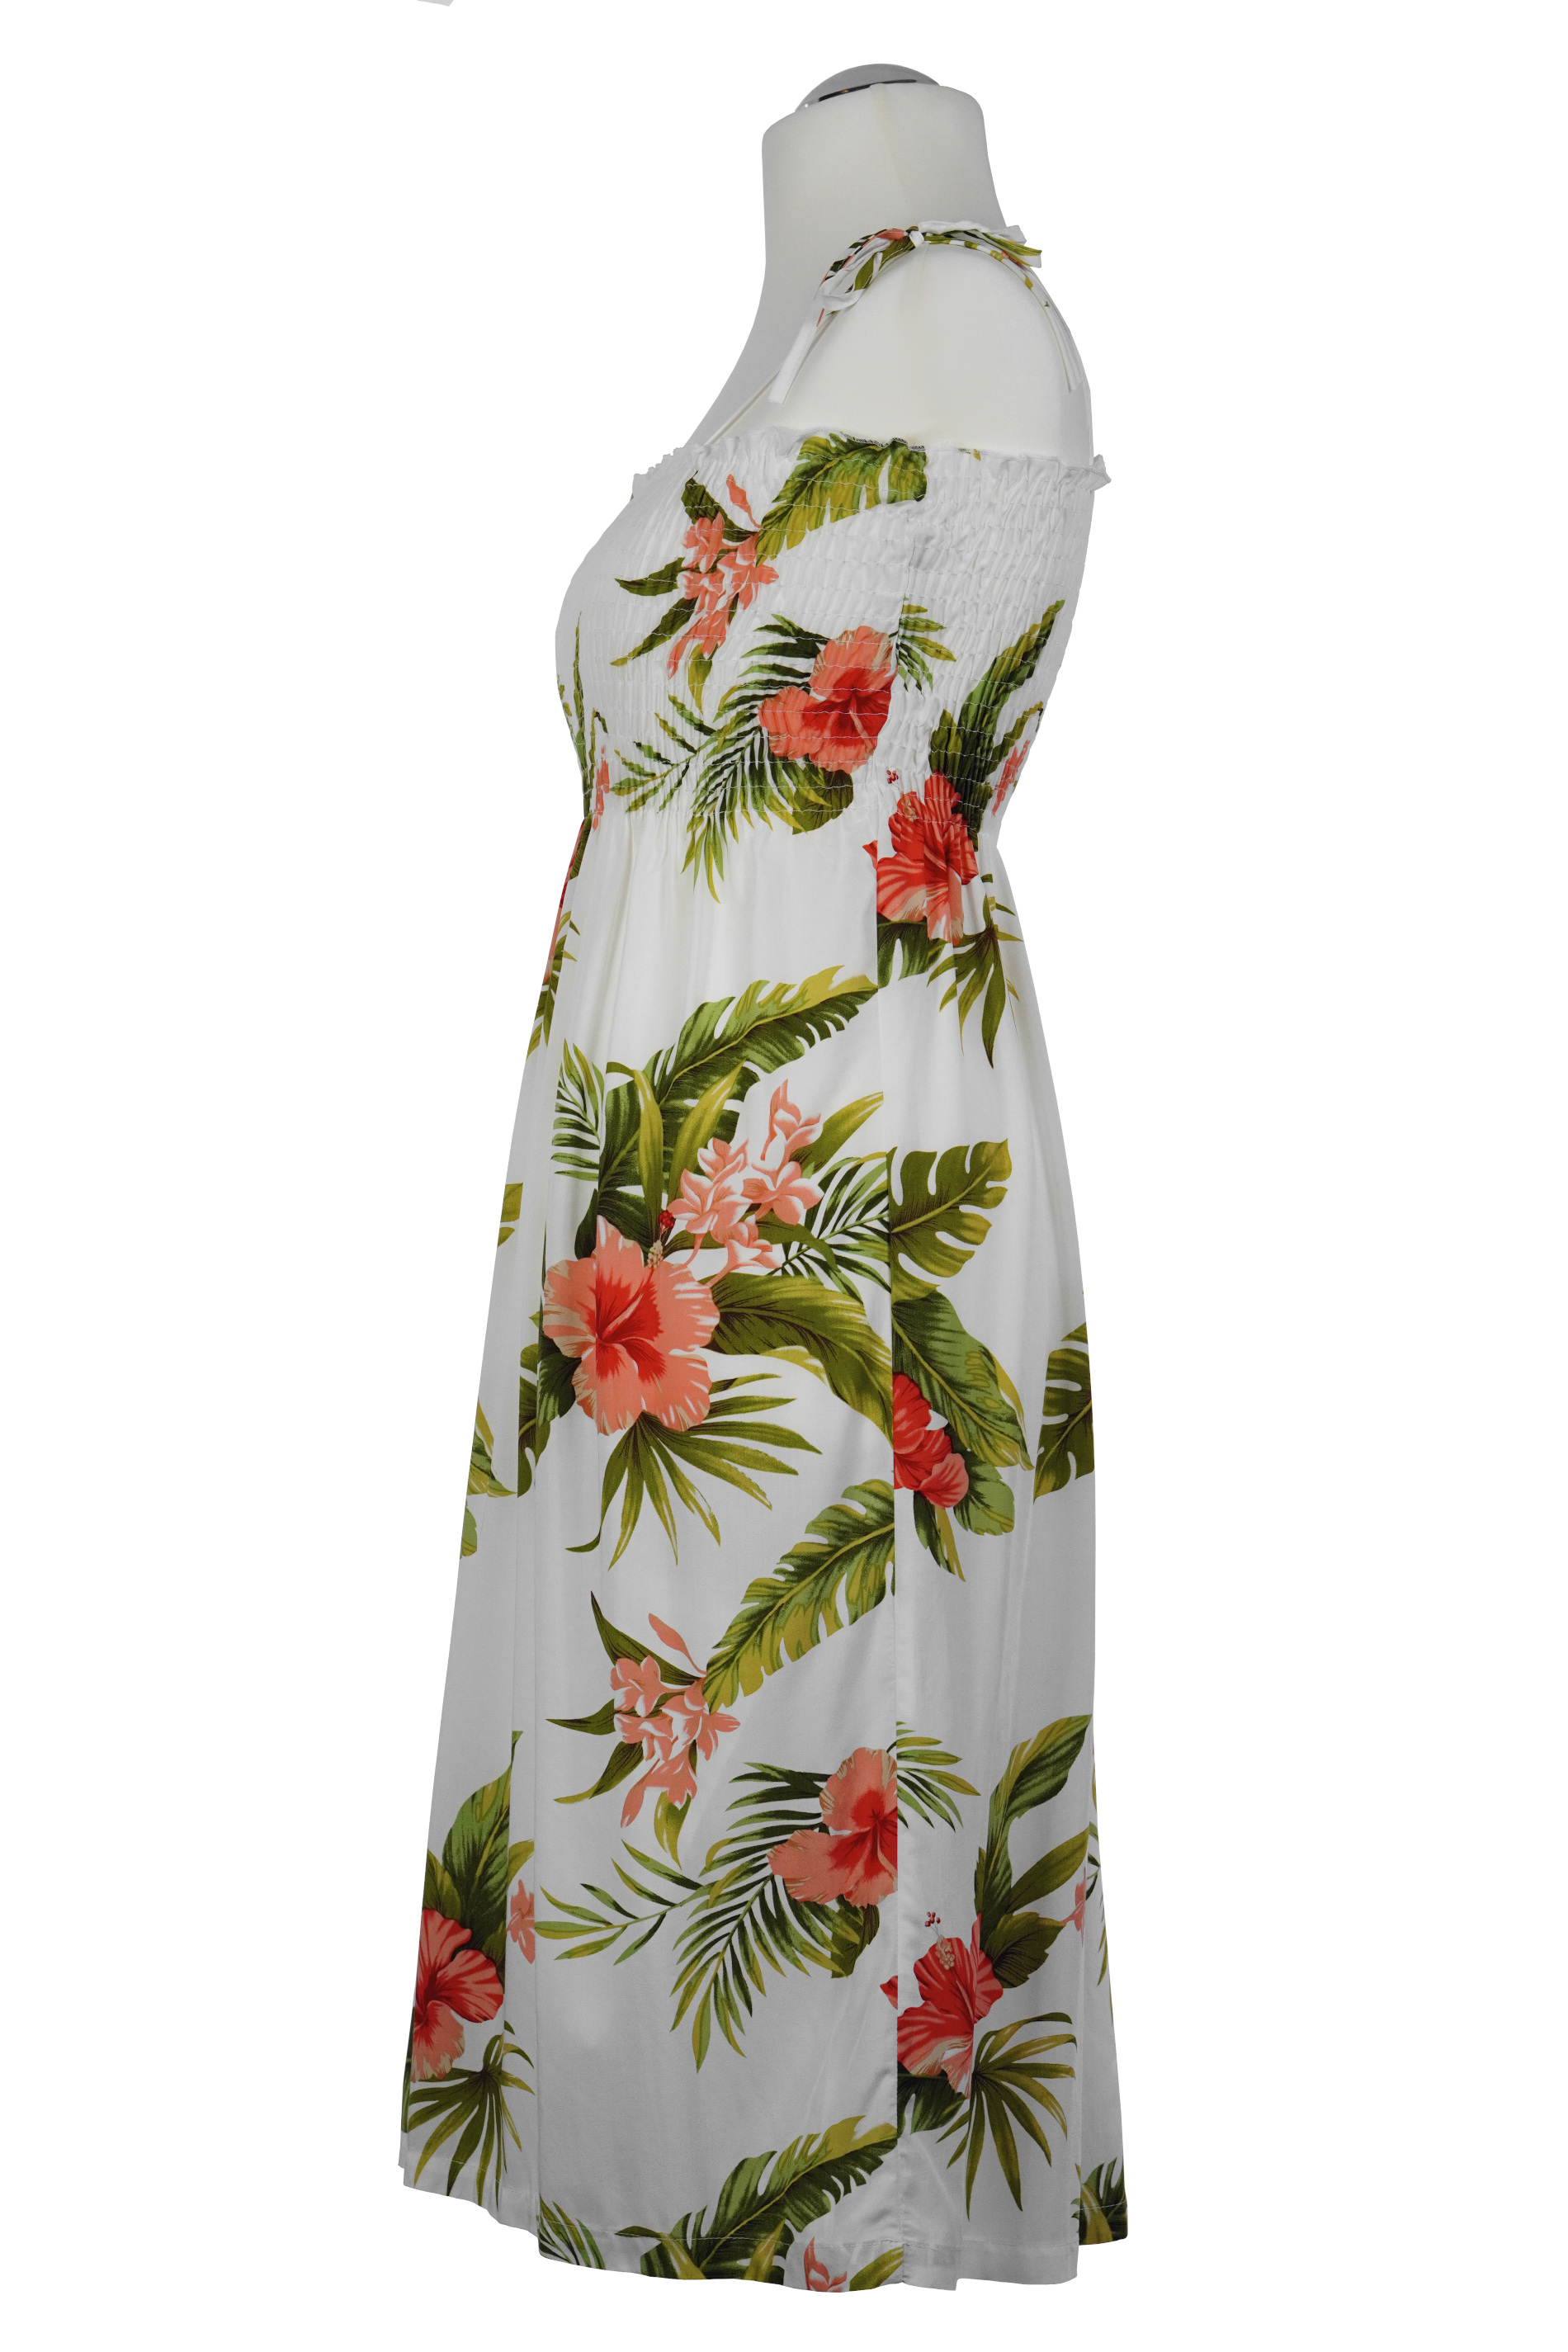 -Hibiscus Heaven- original Hawaii Tube Dress | midi